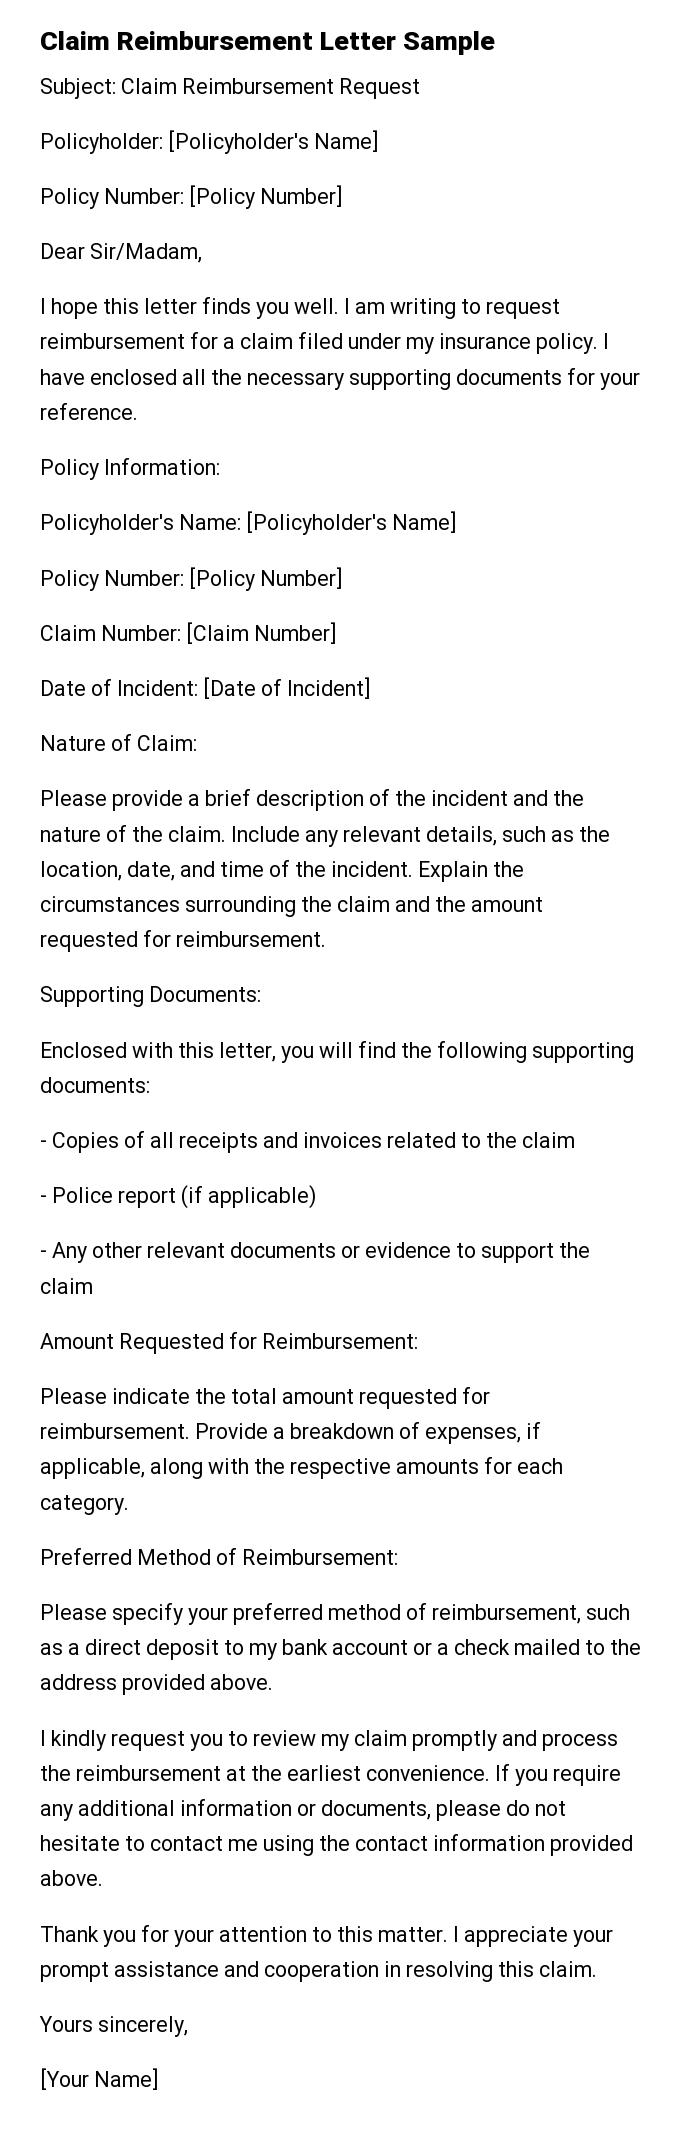 Claim Reimbursement Letter Sample